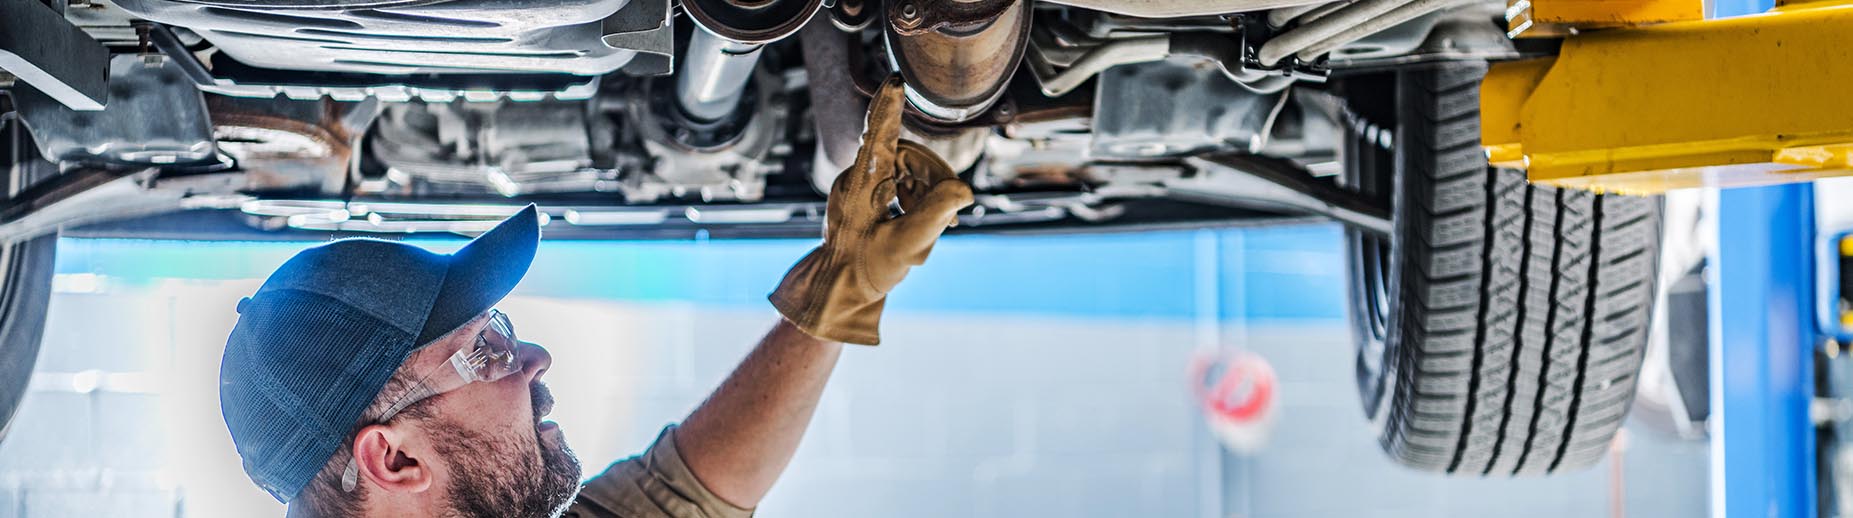 Vallejo Catalytic Converter Services, Exhaust Repair and Auto Repair